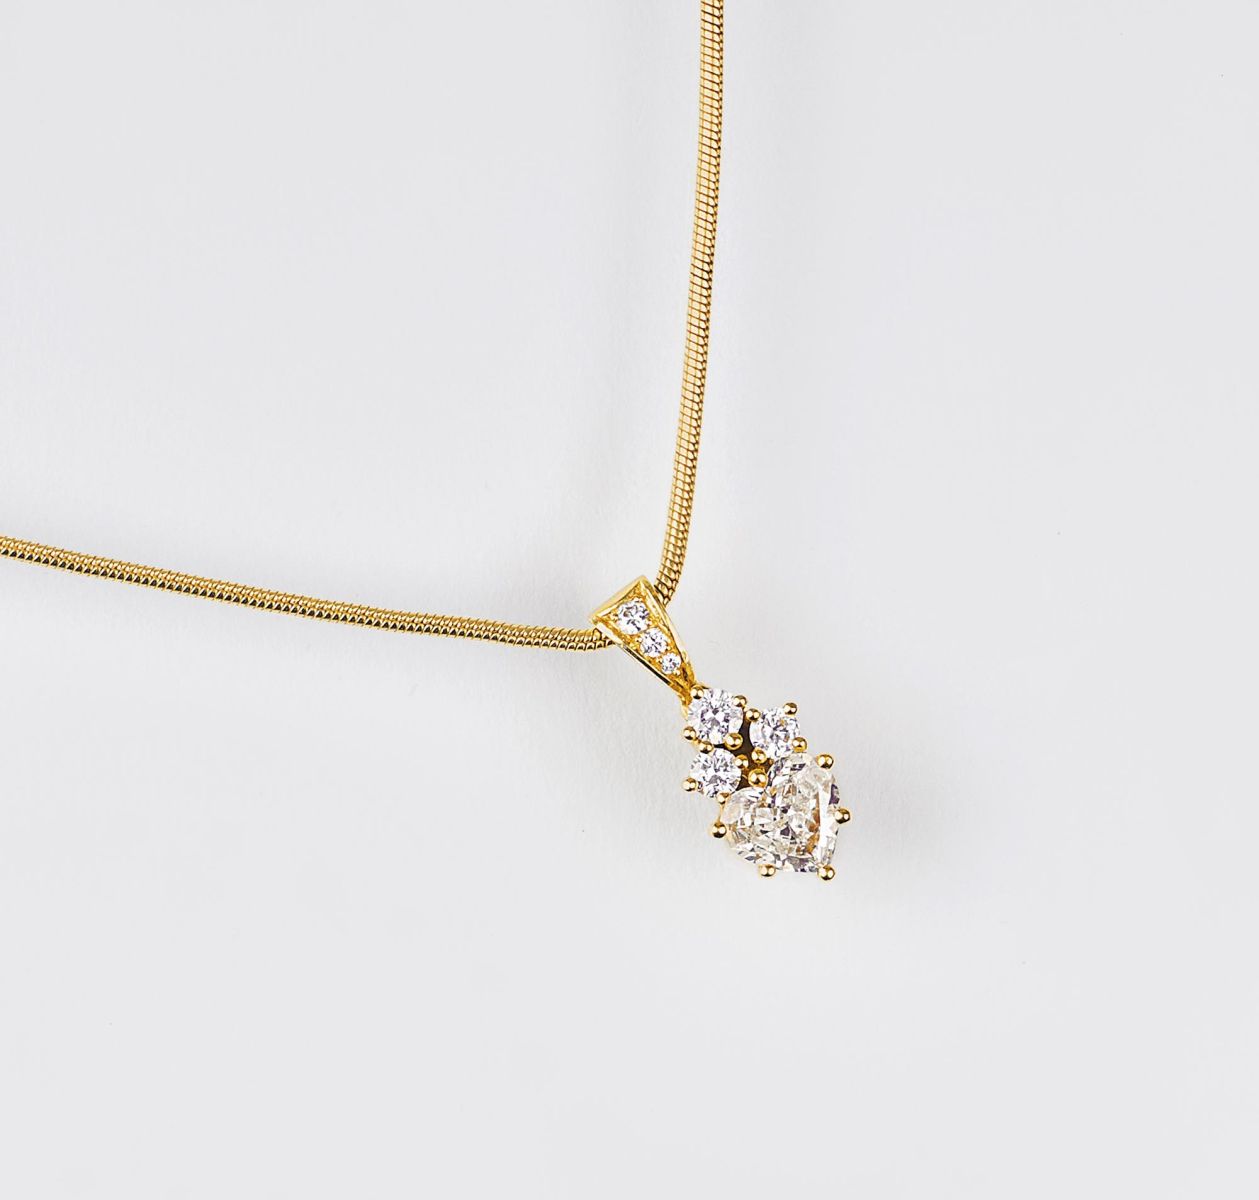 A Diamond Pendant with Heartcut Diamond on Necklace